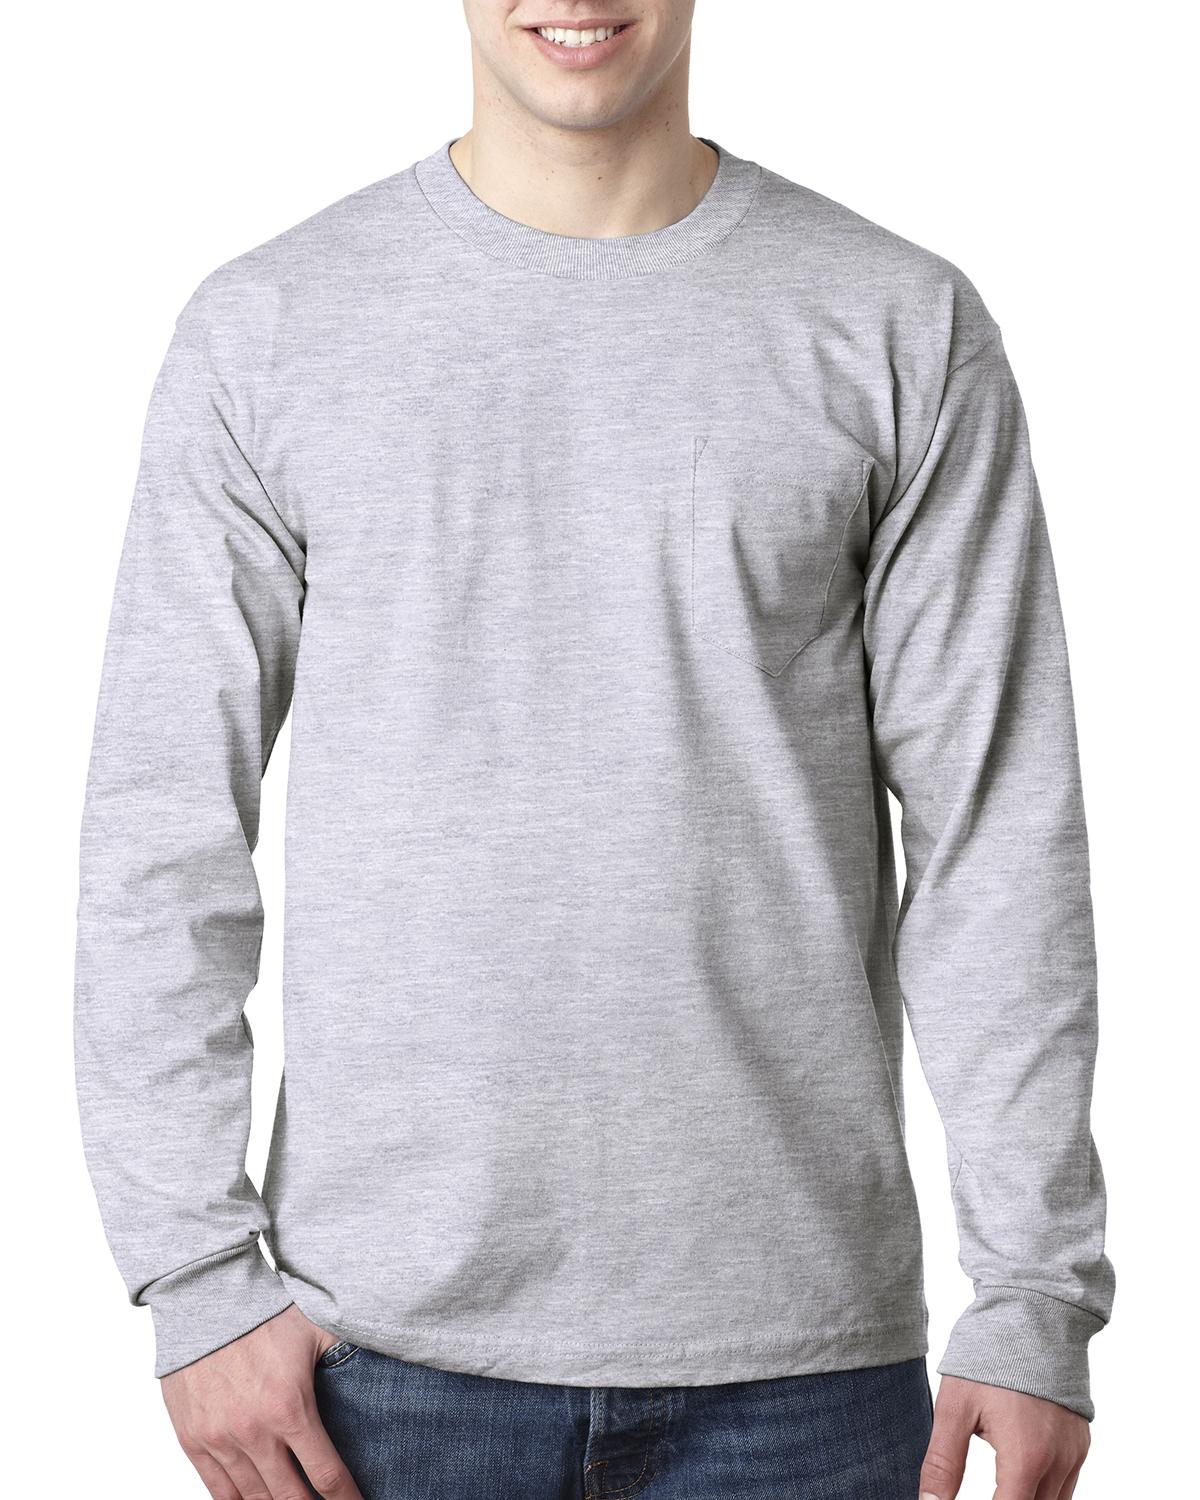 Bayside 6.1 oz Basic Pocket T-Shirt 